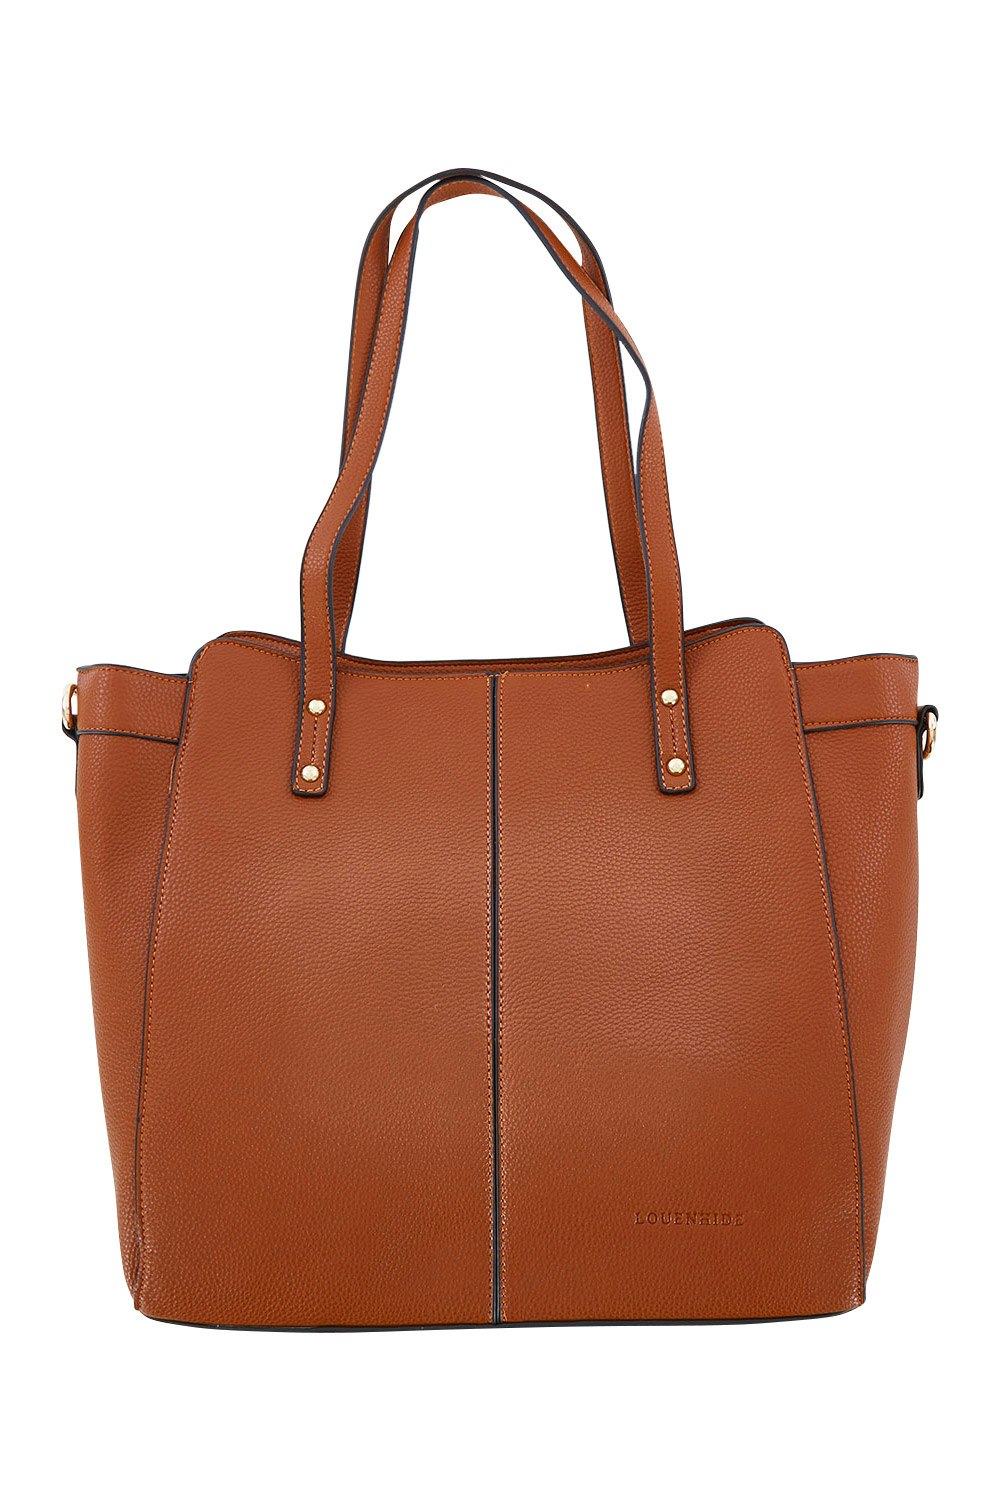 LouenHide bags Penfold Laptop Bag - Womens Handbags at Birdsnest Online